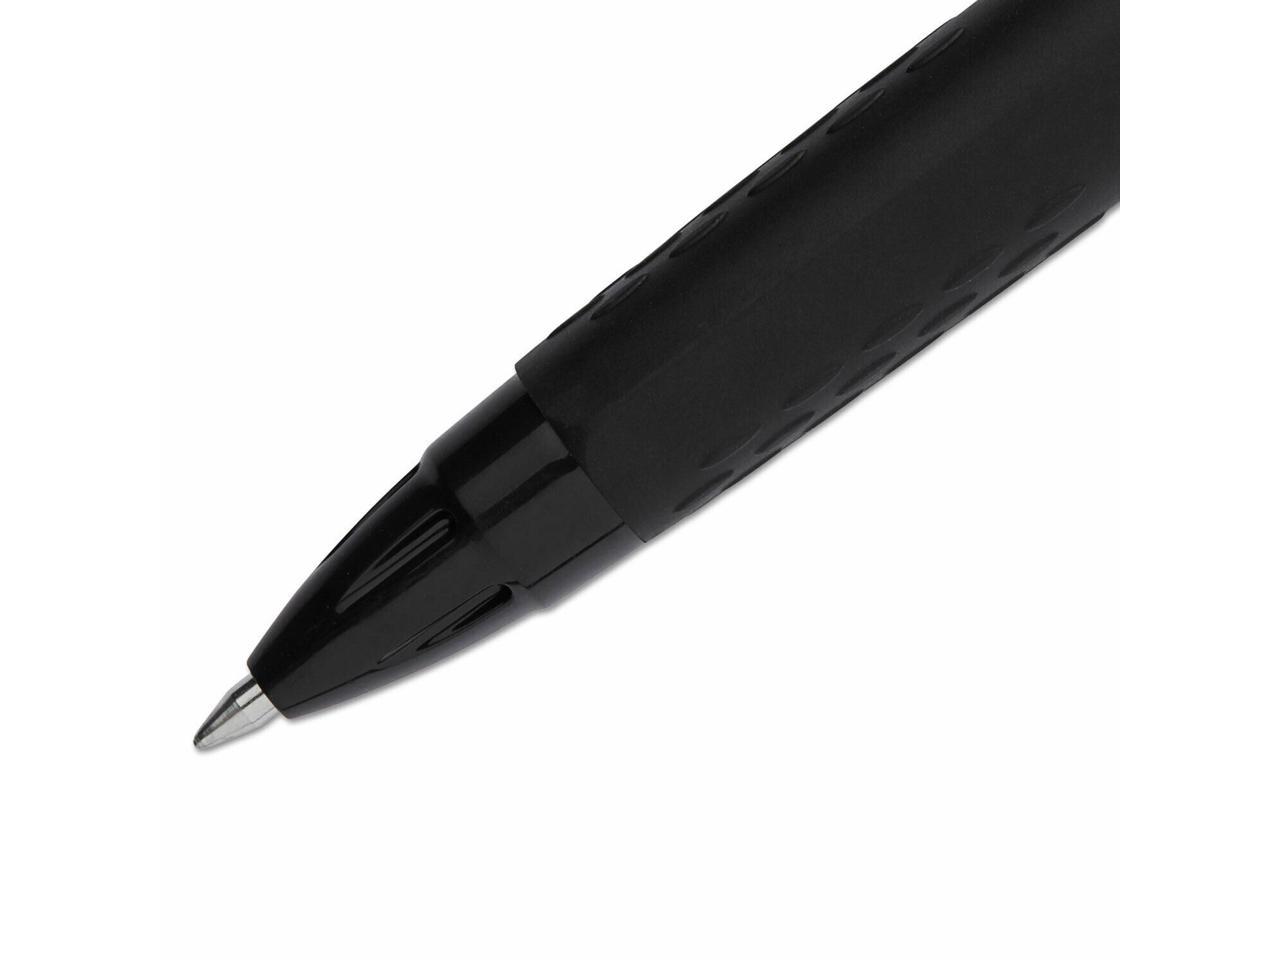 uni-ball 207 BLX Series Gel Pen .7 mm Blue/Black 1837931